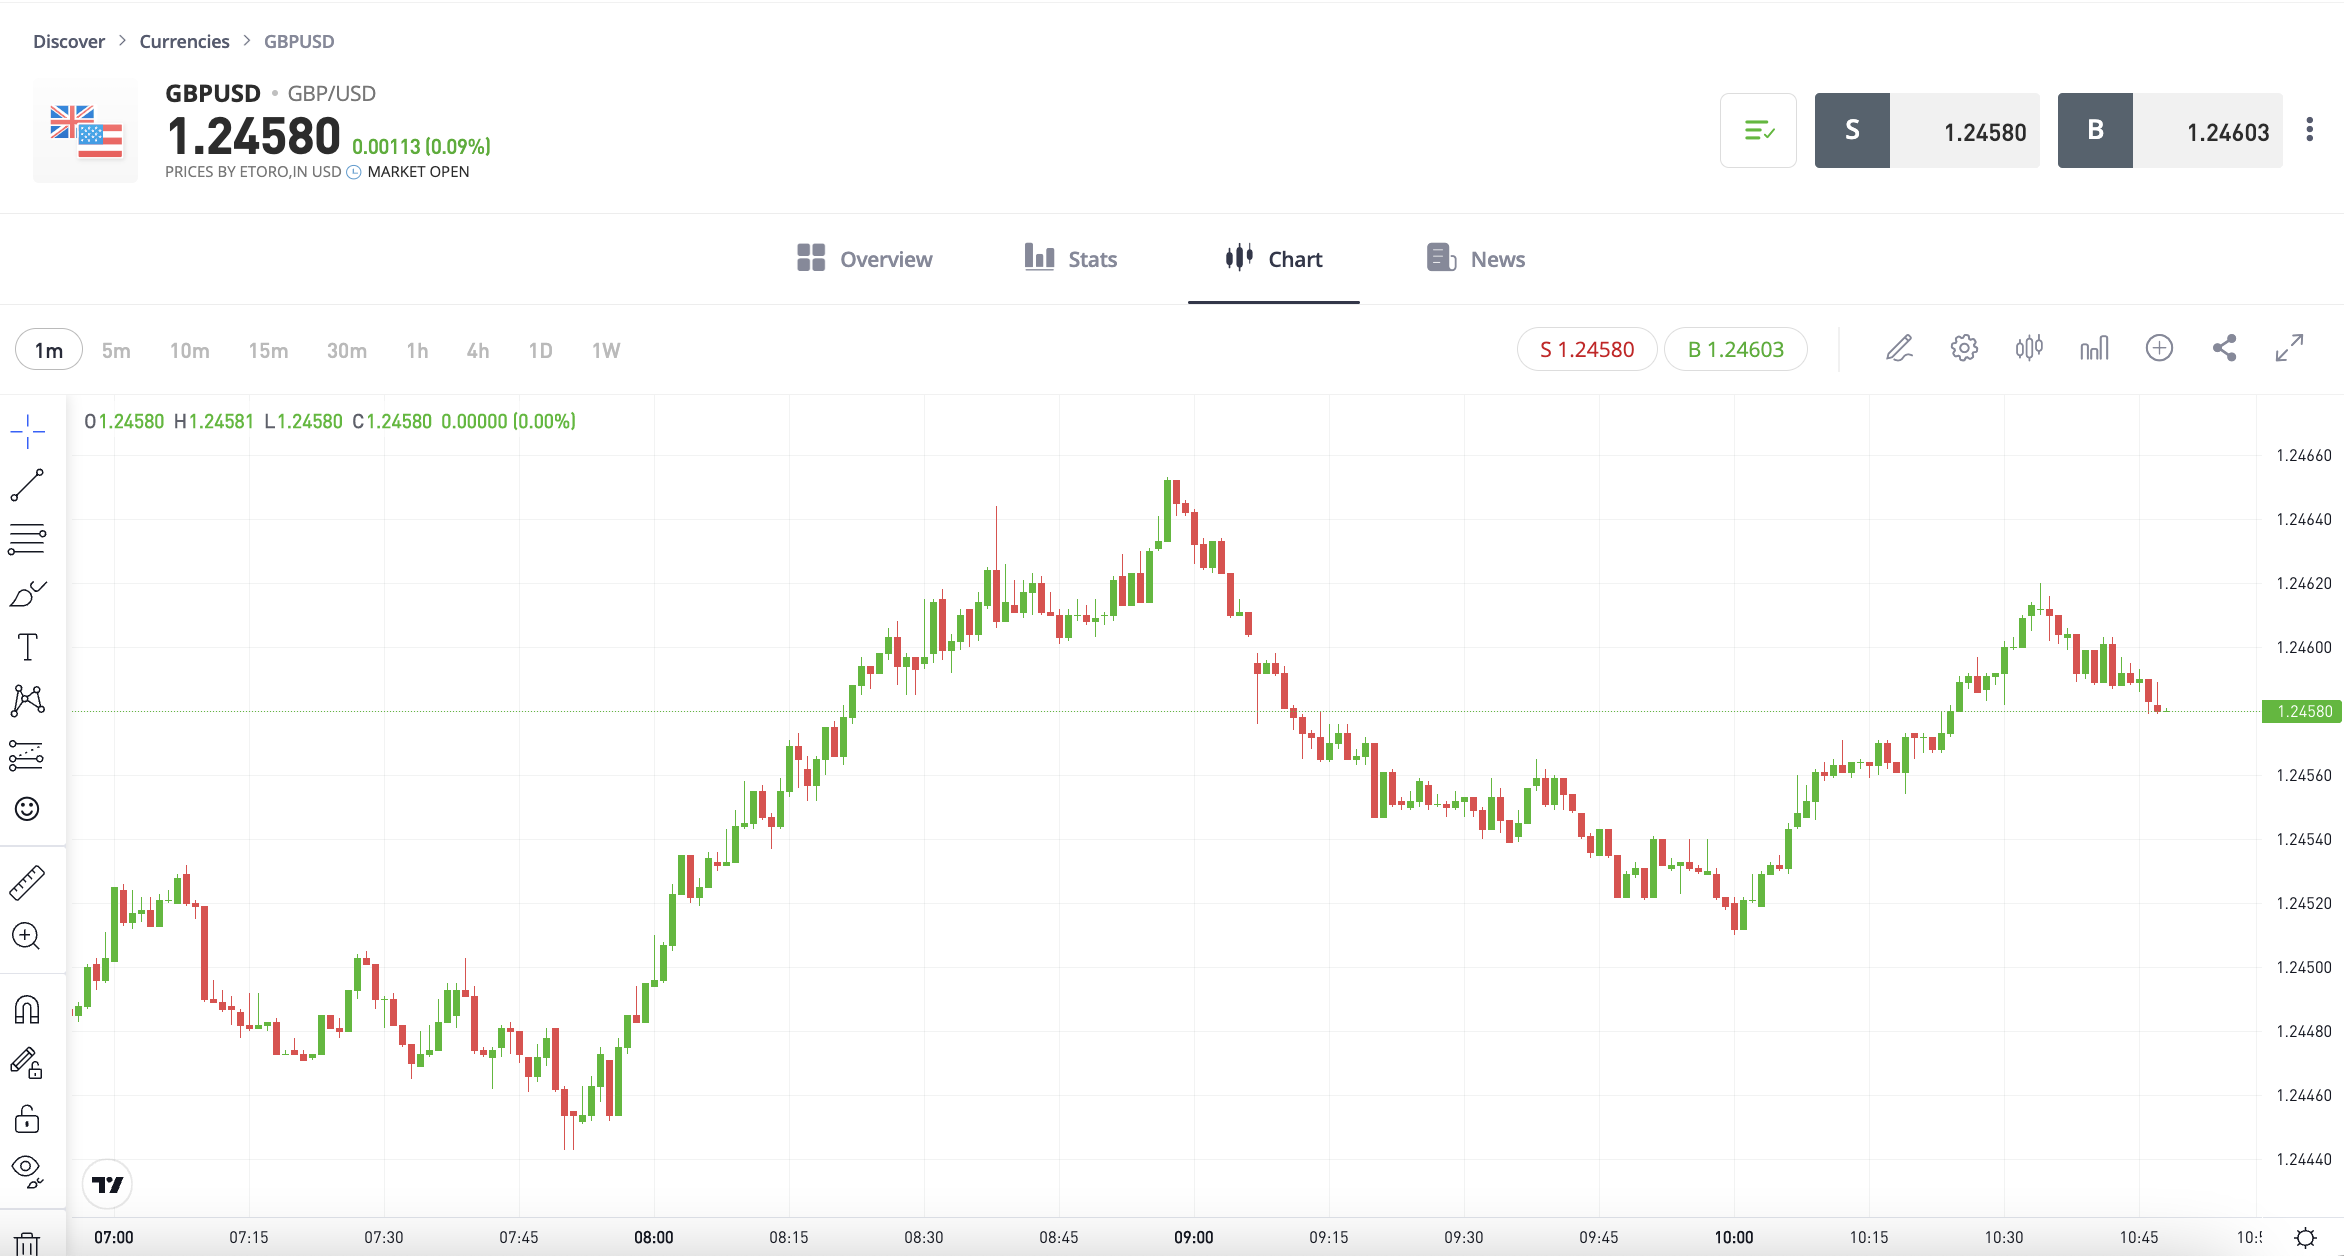 GBP/USD price chart eToro